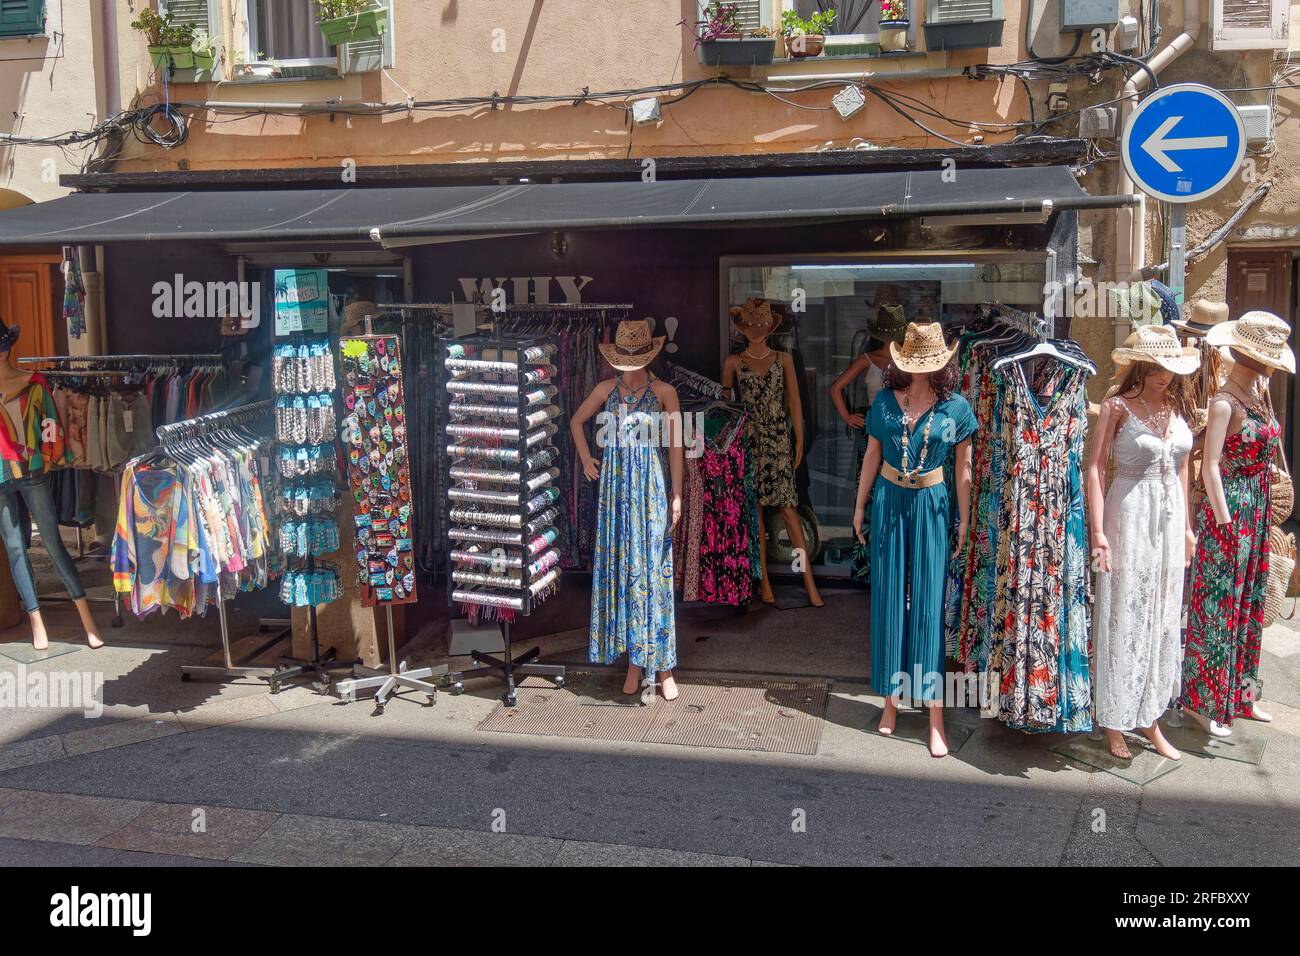 Einkaufsstrasse Bastia, shop mit Puppen, Korsika, Frankreich, Europa Stock Photo